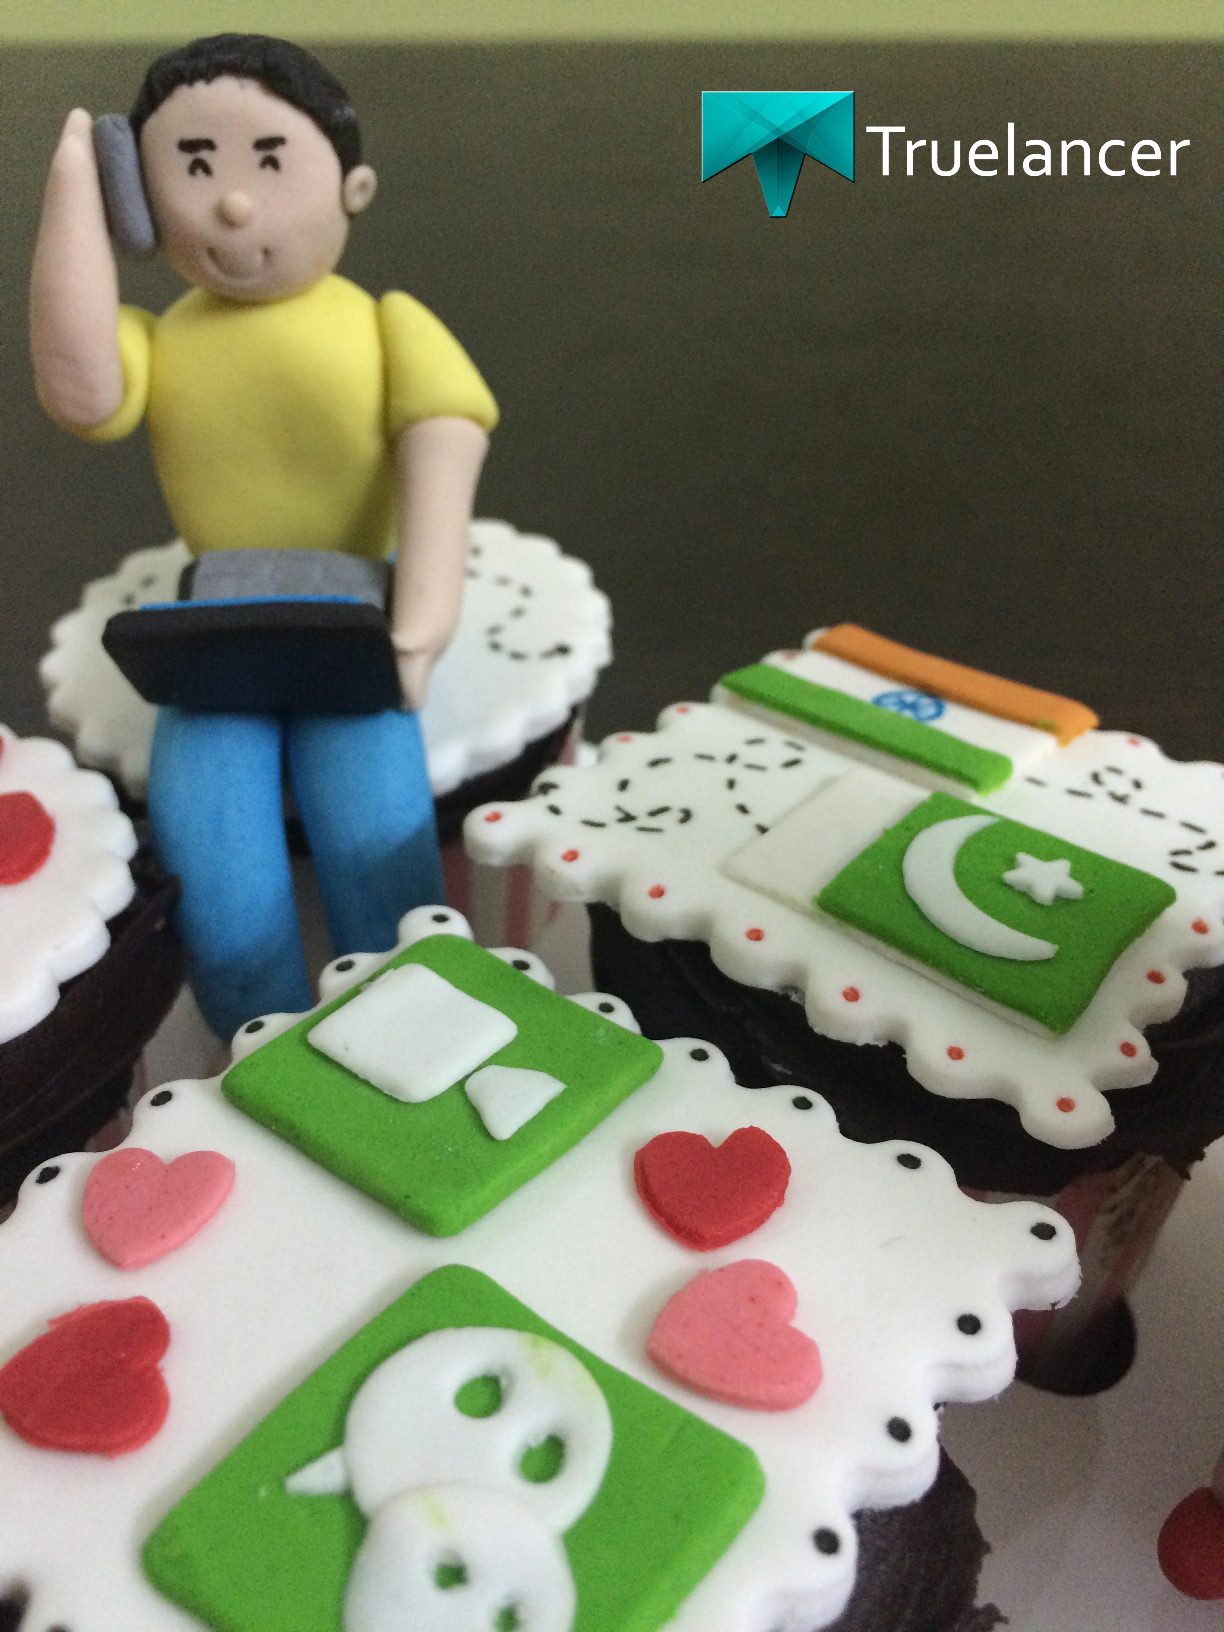 cupcakes india pakistan love story software engineer boy